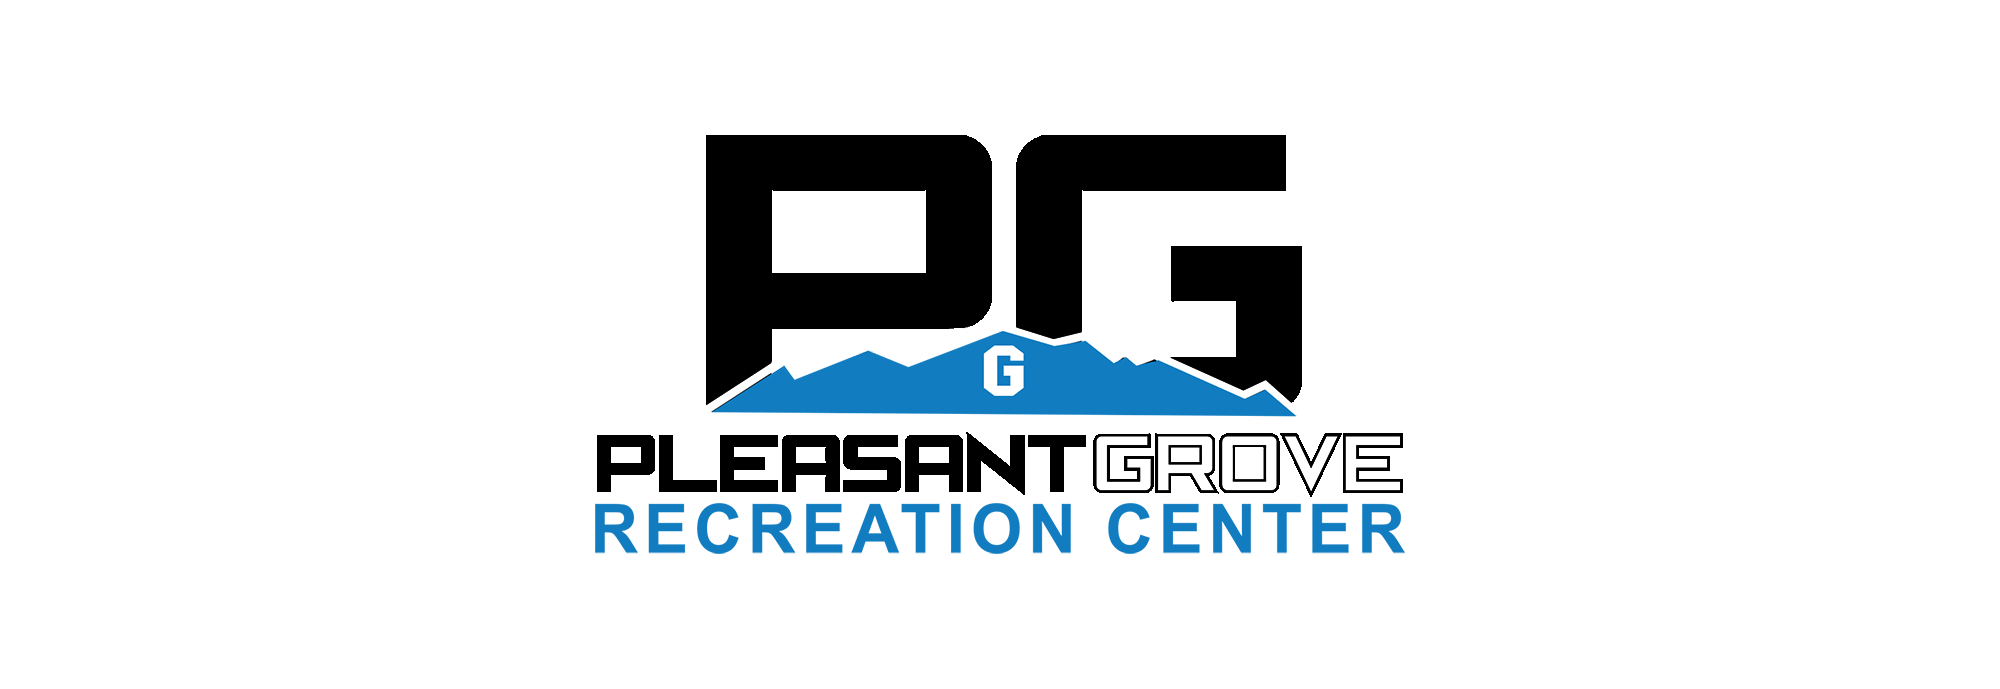 recreation center logo banner